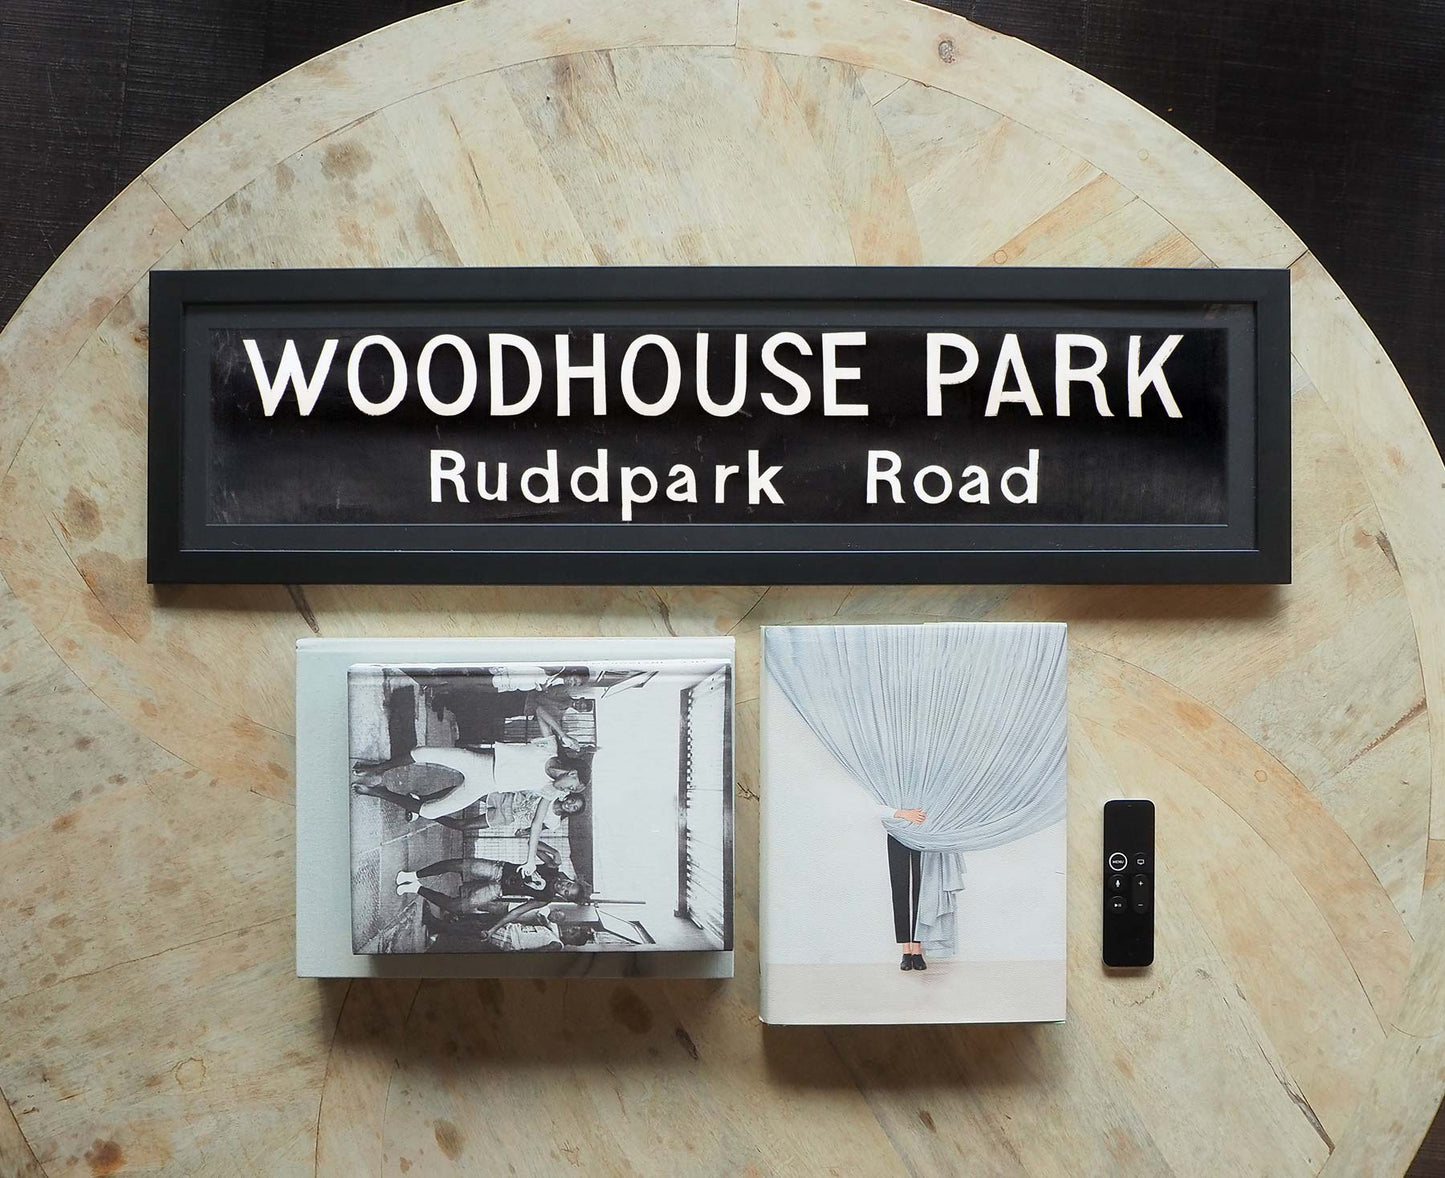 Woodhouse Park Ruddpark Road Framed Bus Blind